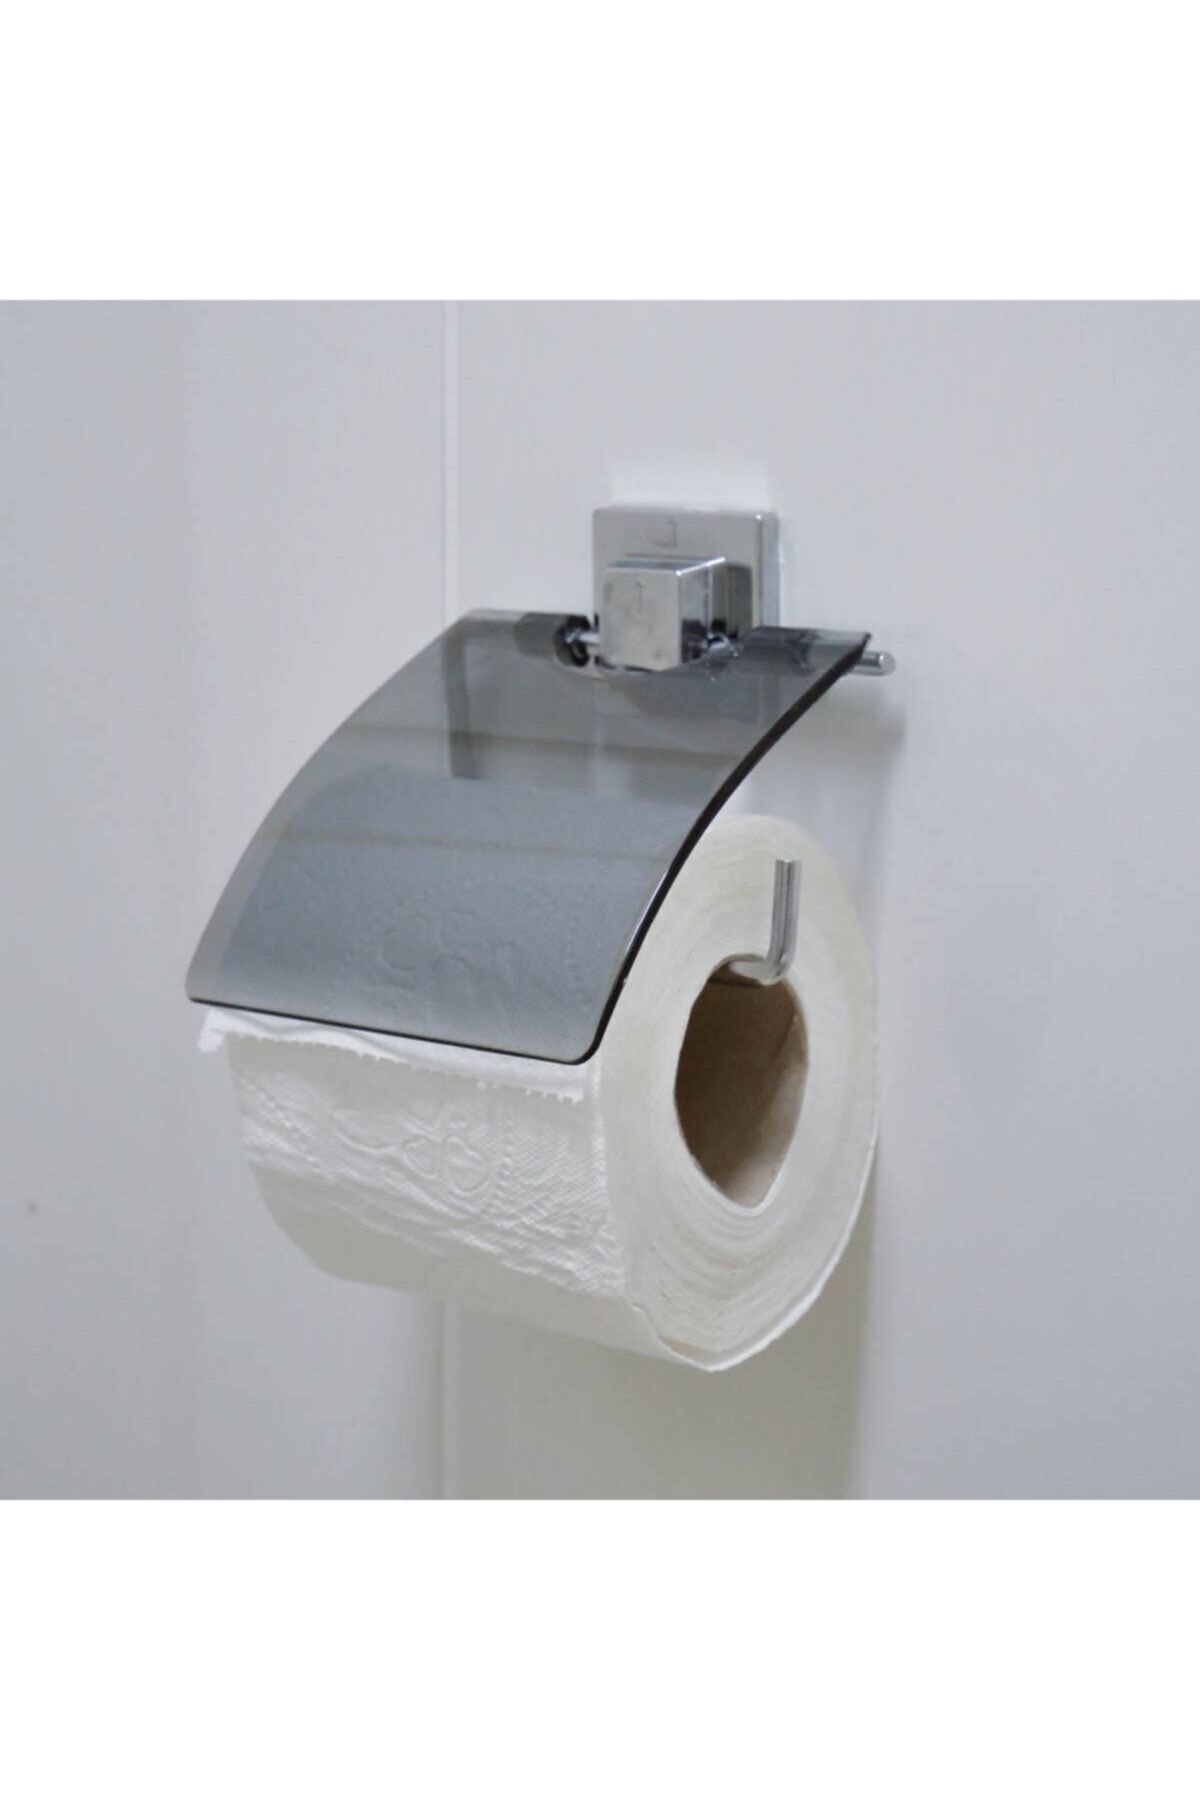 ZENSAN Krom Kaplama Paslanmaz Tuvalet Kağıtlığı